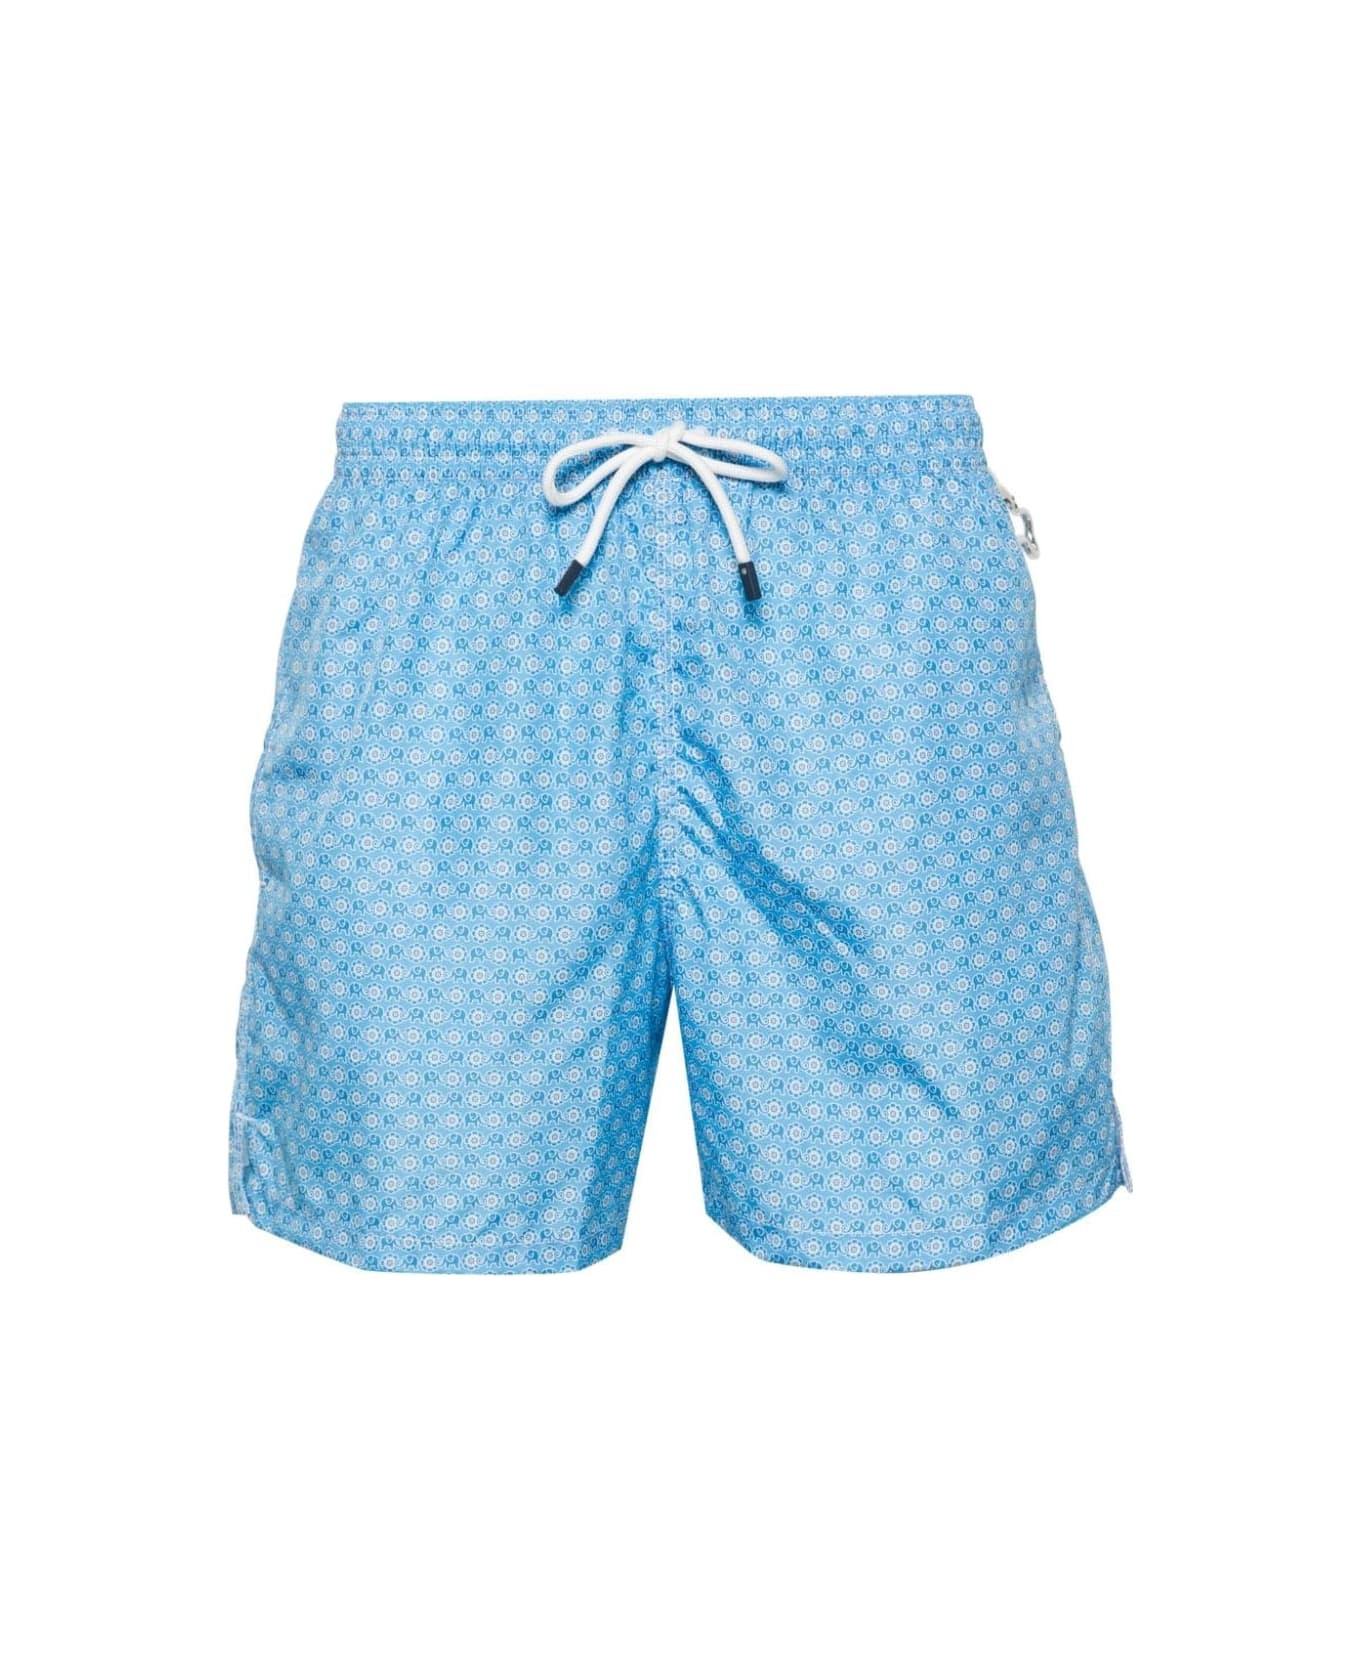 Fedeli Light Blue Swim Shorts With Elephants And Flowers Pattern - Blue スイムトランクス